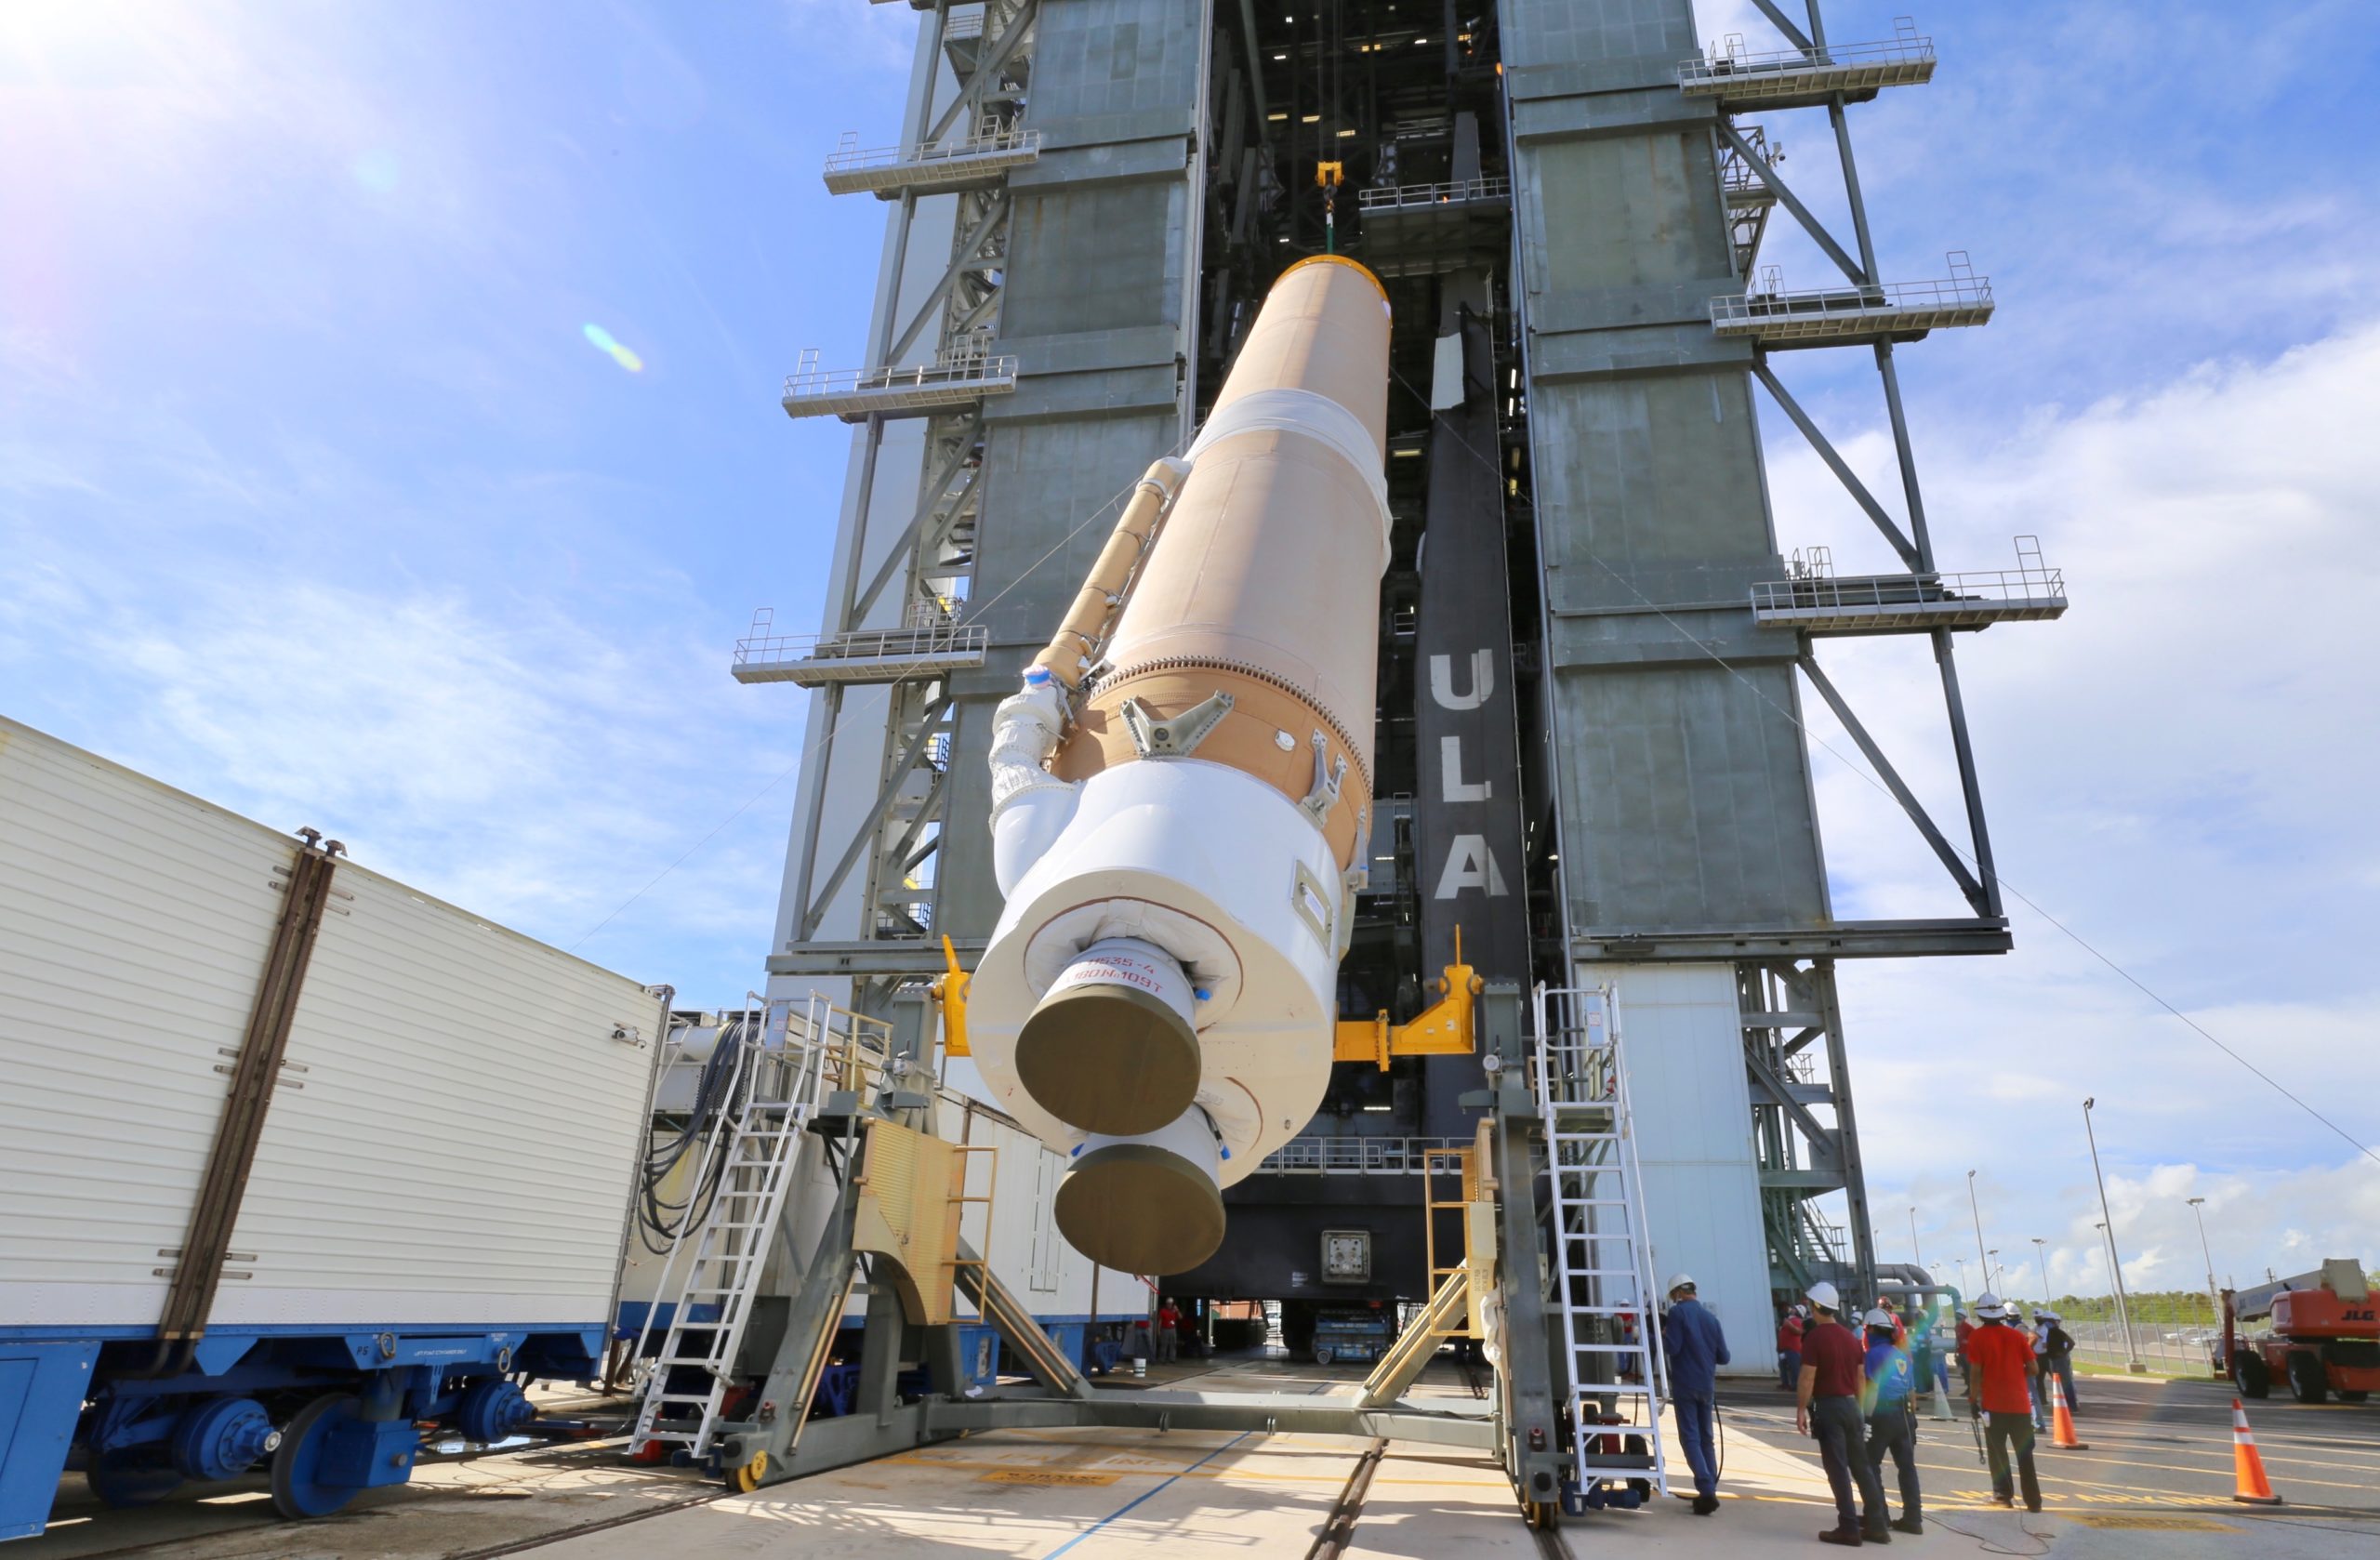 ATLAS V  ULA USAF DOD ORIGINAL NRO Classified SATELLITE Launch PATCH NROL 61 